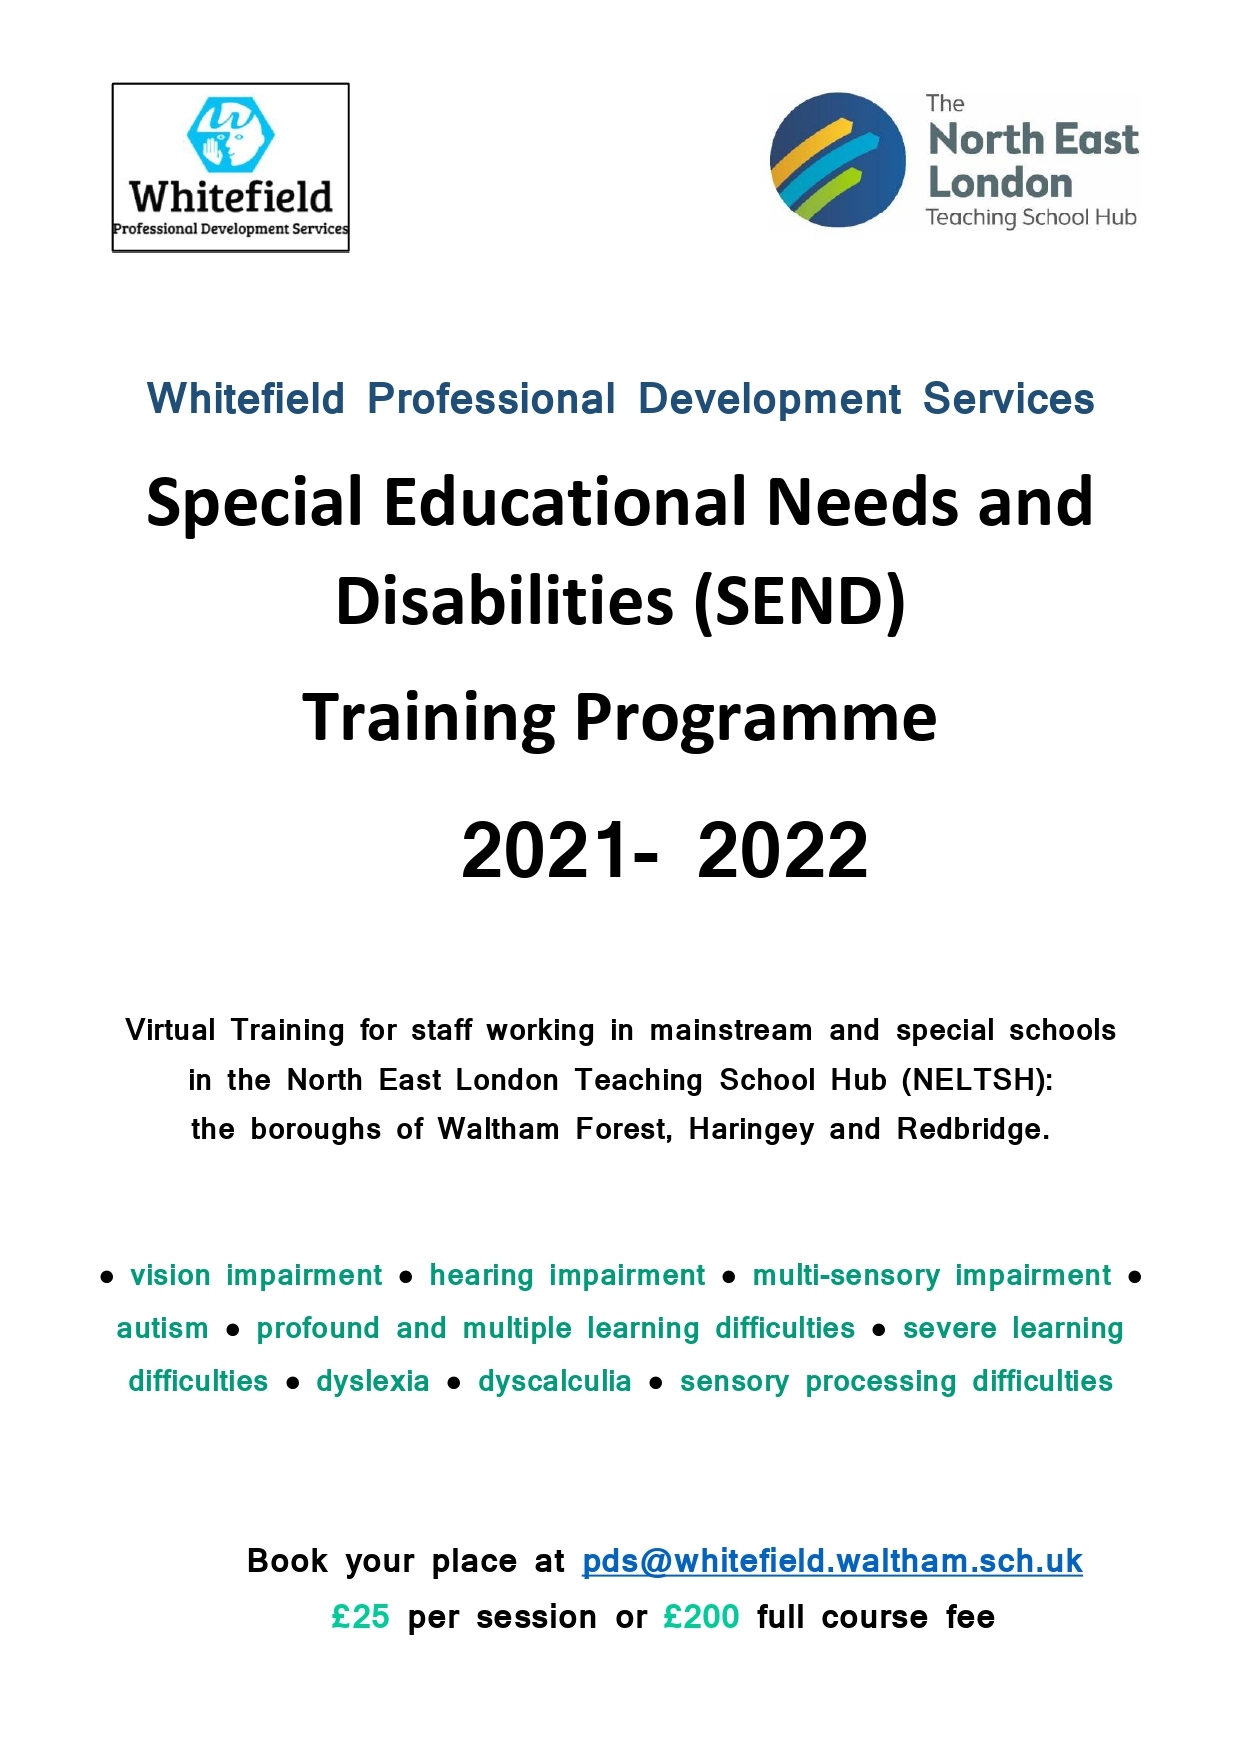 Send training 2021 2022 v2 page 0001